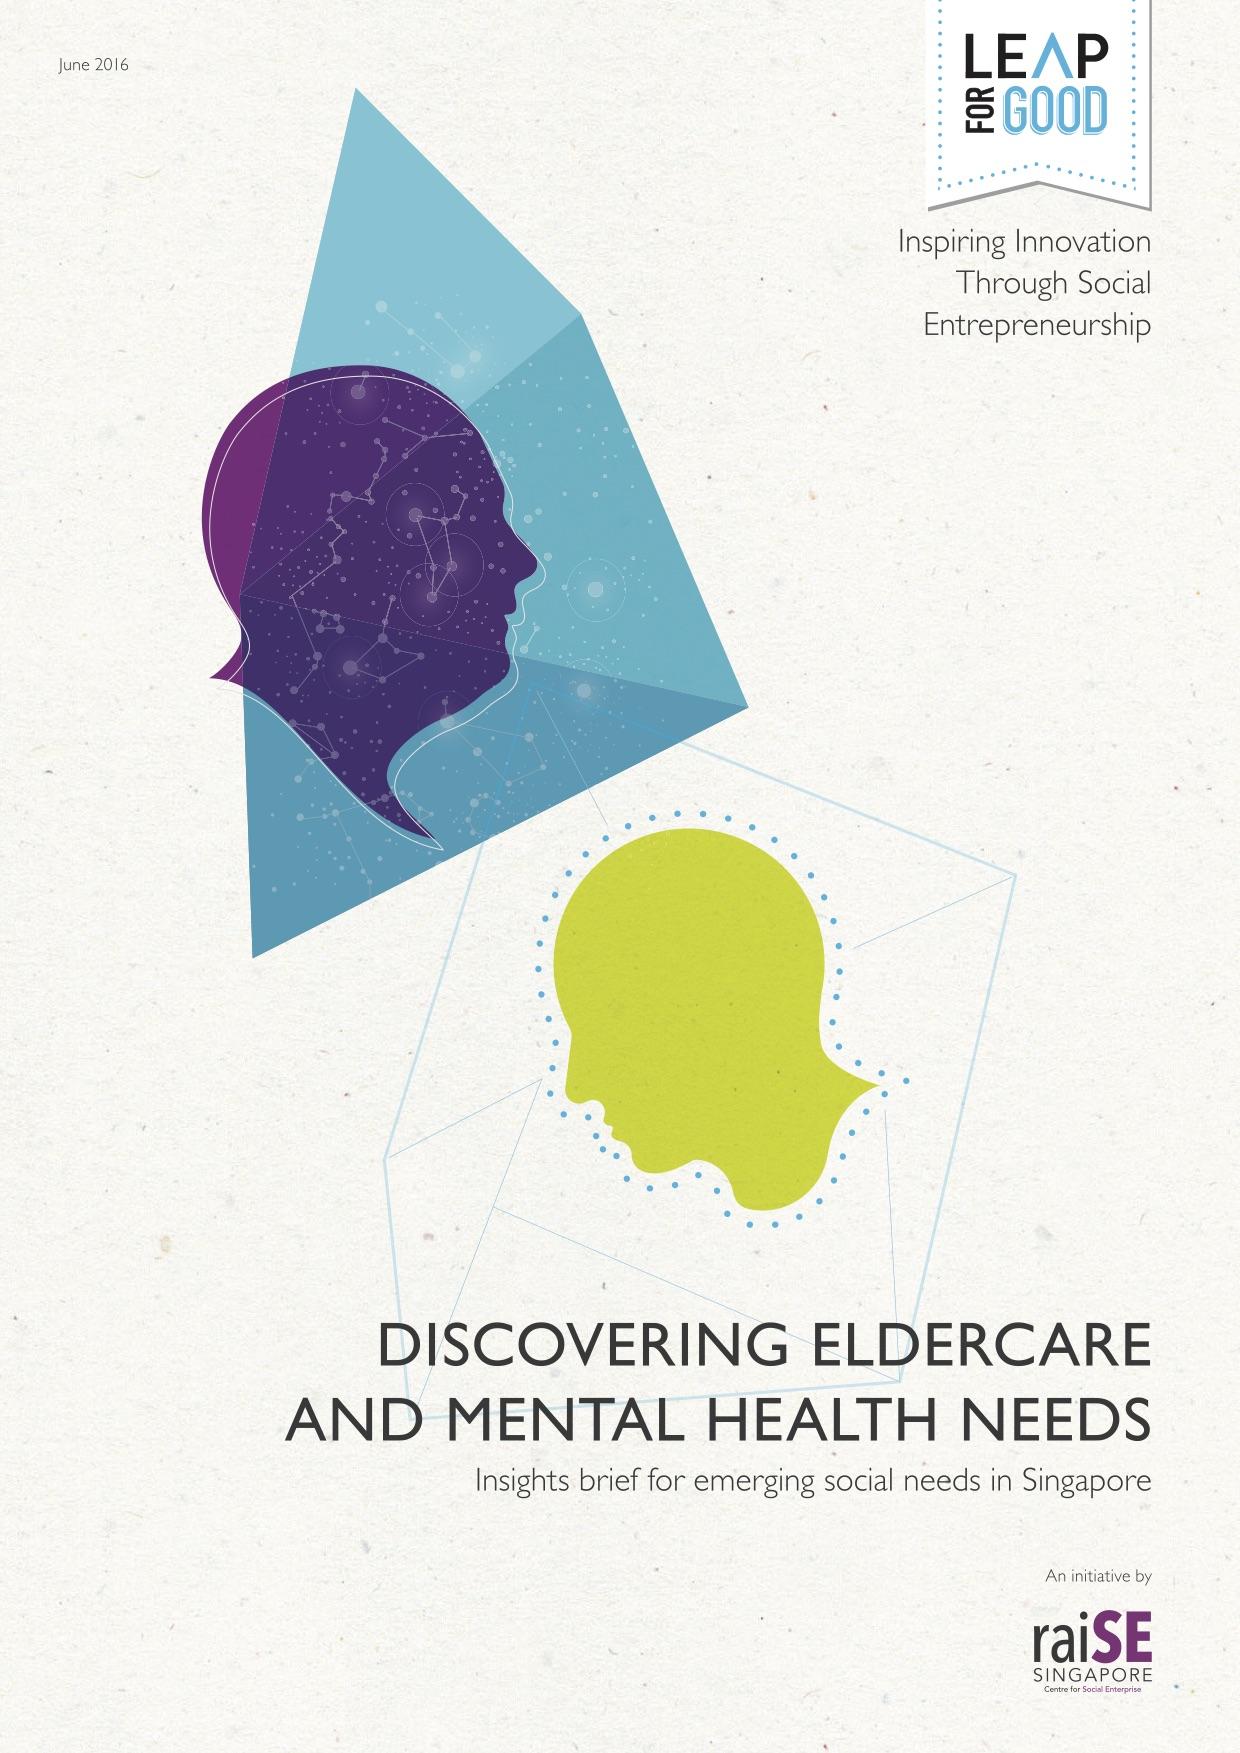 LeapForGood Insights Brief: Eldercare & Mental Health in Singapore